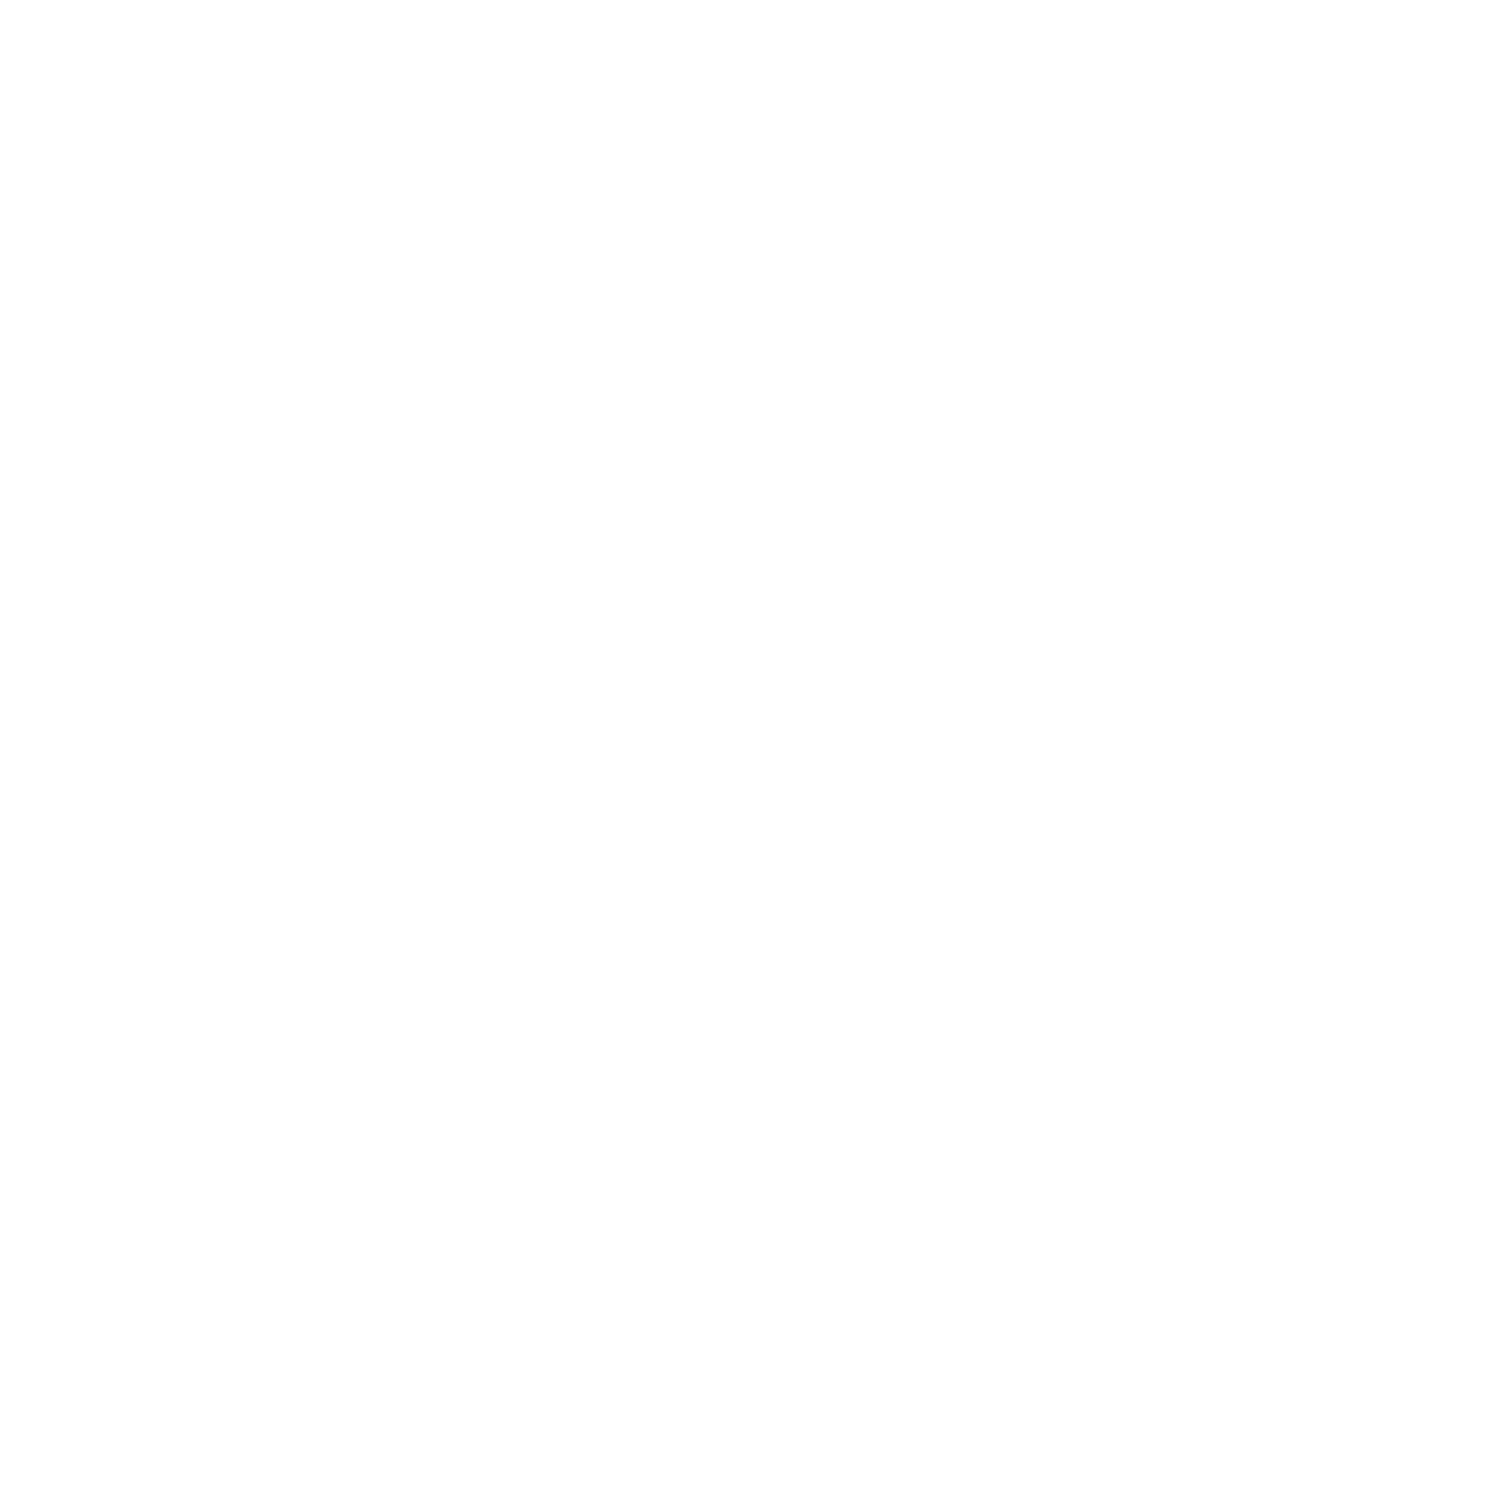 Max Loew Photo